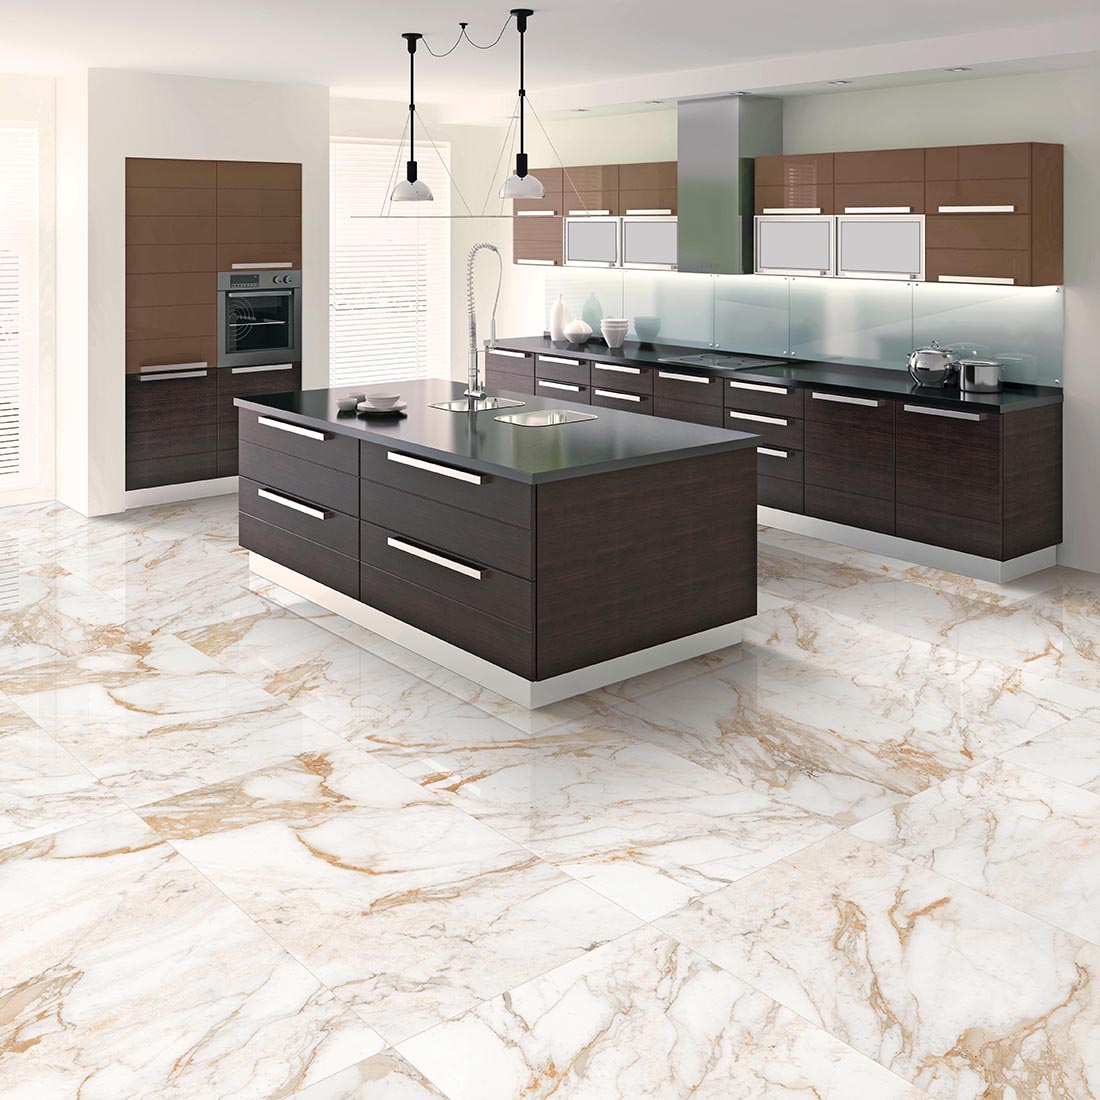 Job Lot: 83 Tiles (30 sq.m) Icon Gold 60x60cm White Polished Porcelain Kitchen Bathroom Wall Floor Tiles